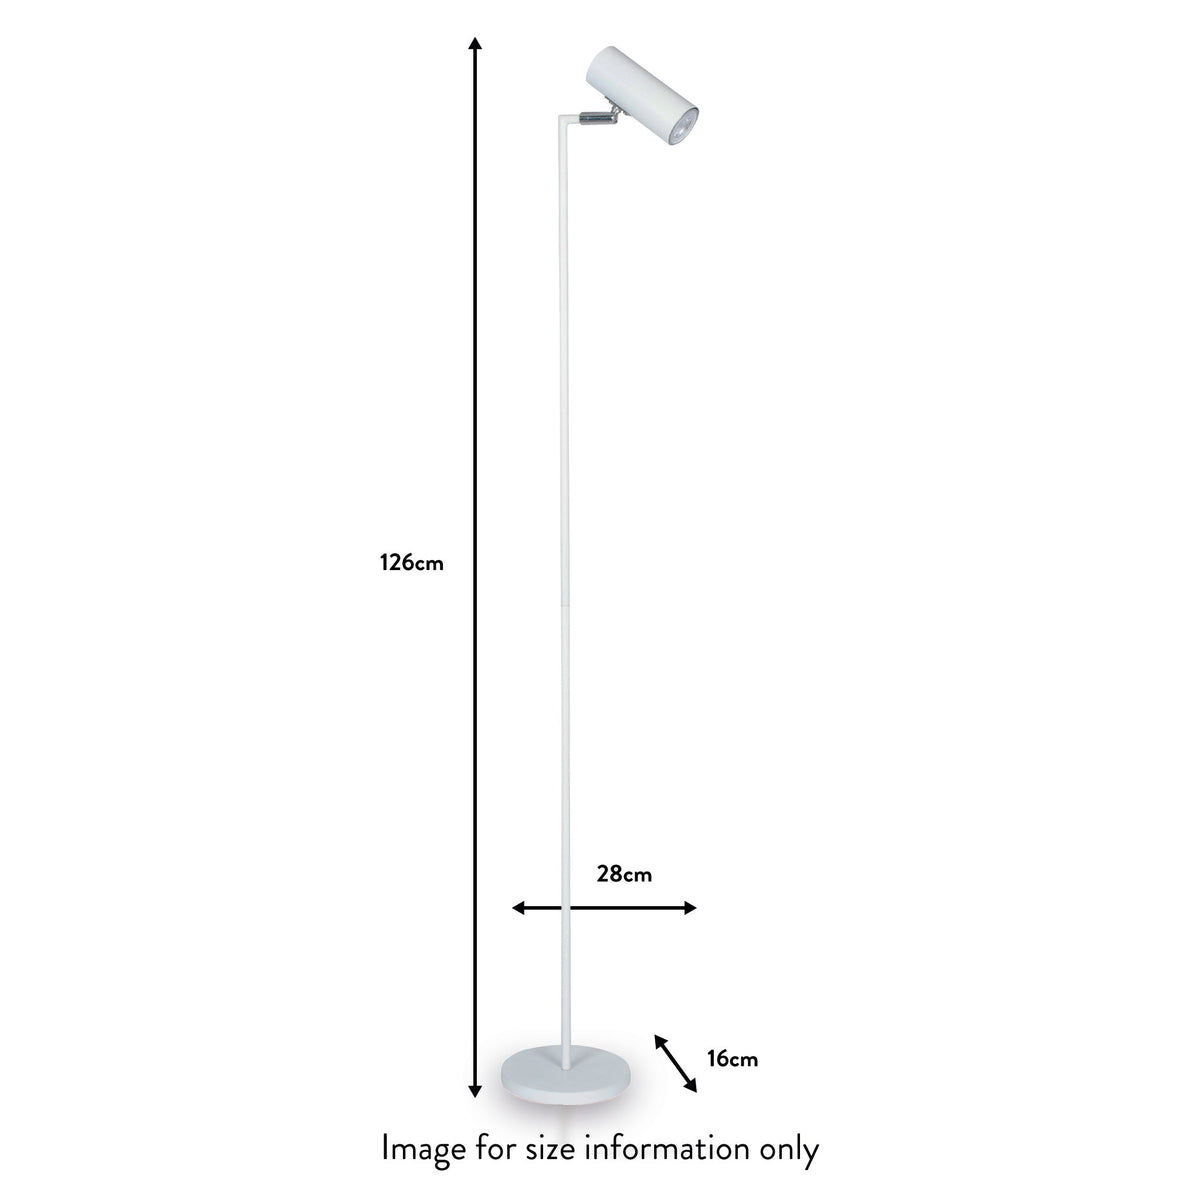 Arris White Adjustable Task Floor Lamp dimensions